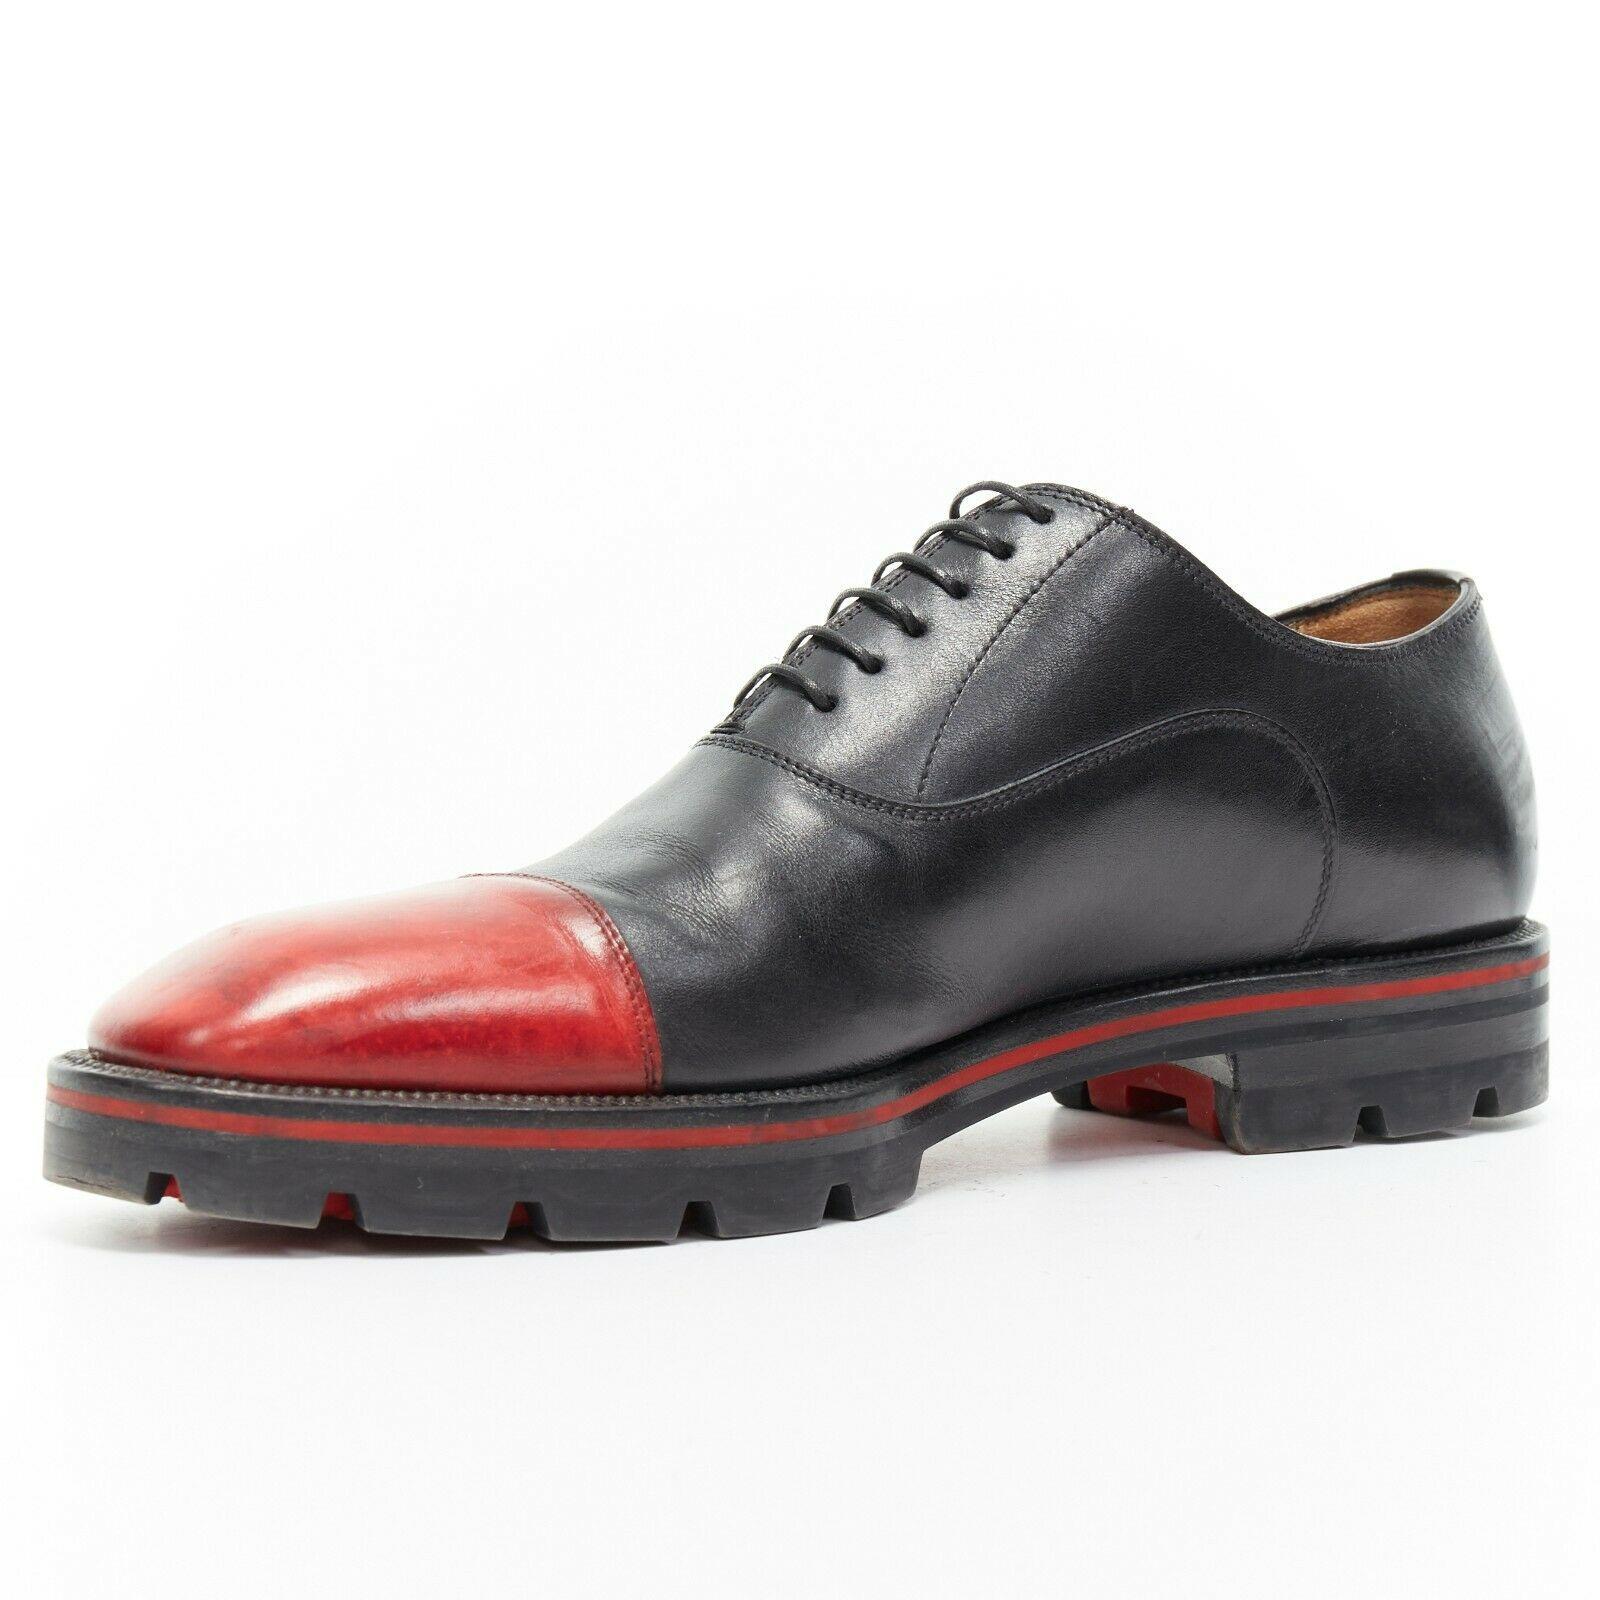 CHRISTIAN LOUBOUTIN Hubertus red toe rubber lug sole oxford shoes 